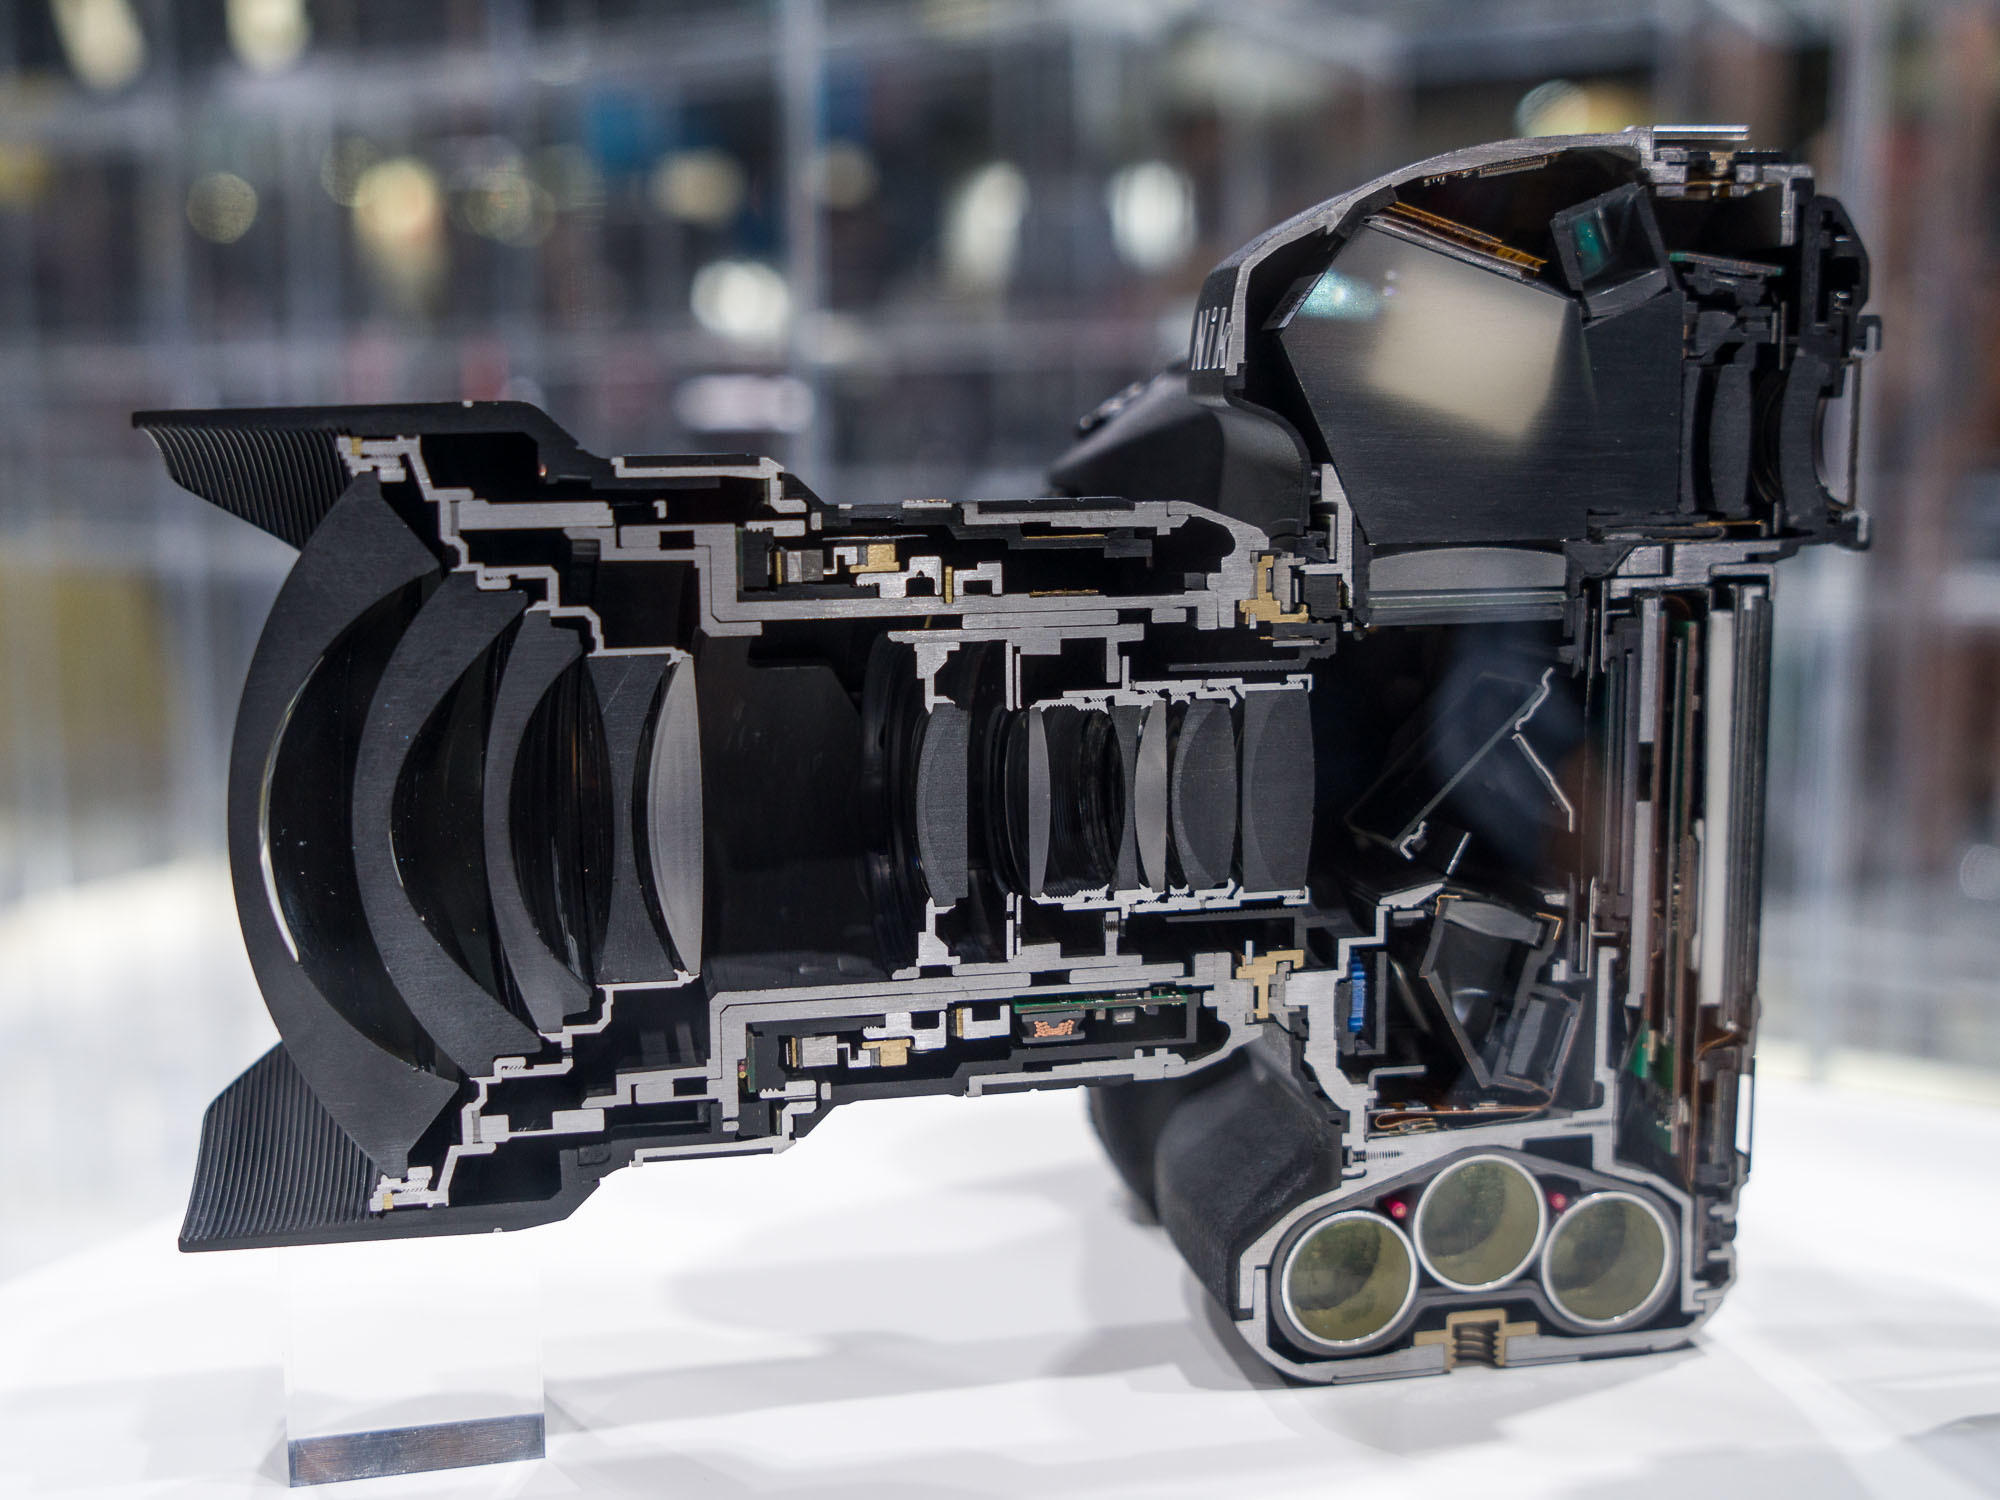 The framework of the Nikon D5 Camera.